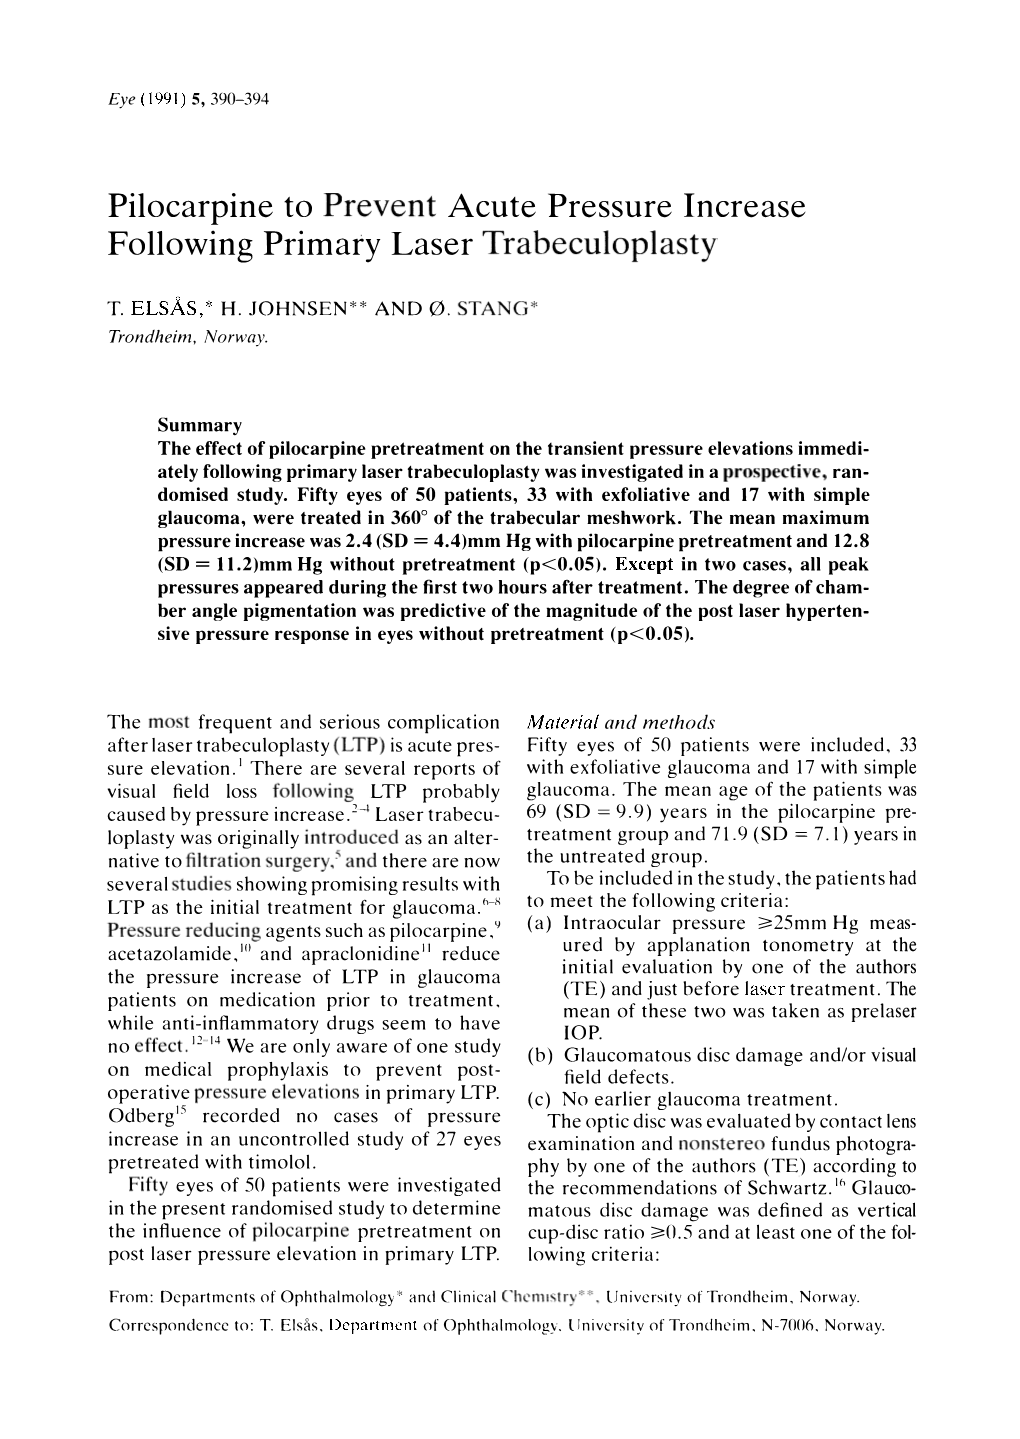 Pilocarpine to Prevent Acute Pressure Increase Following Primary Laser Trabeculoplasty